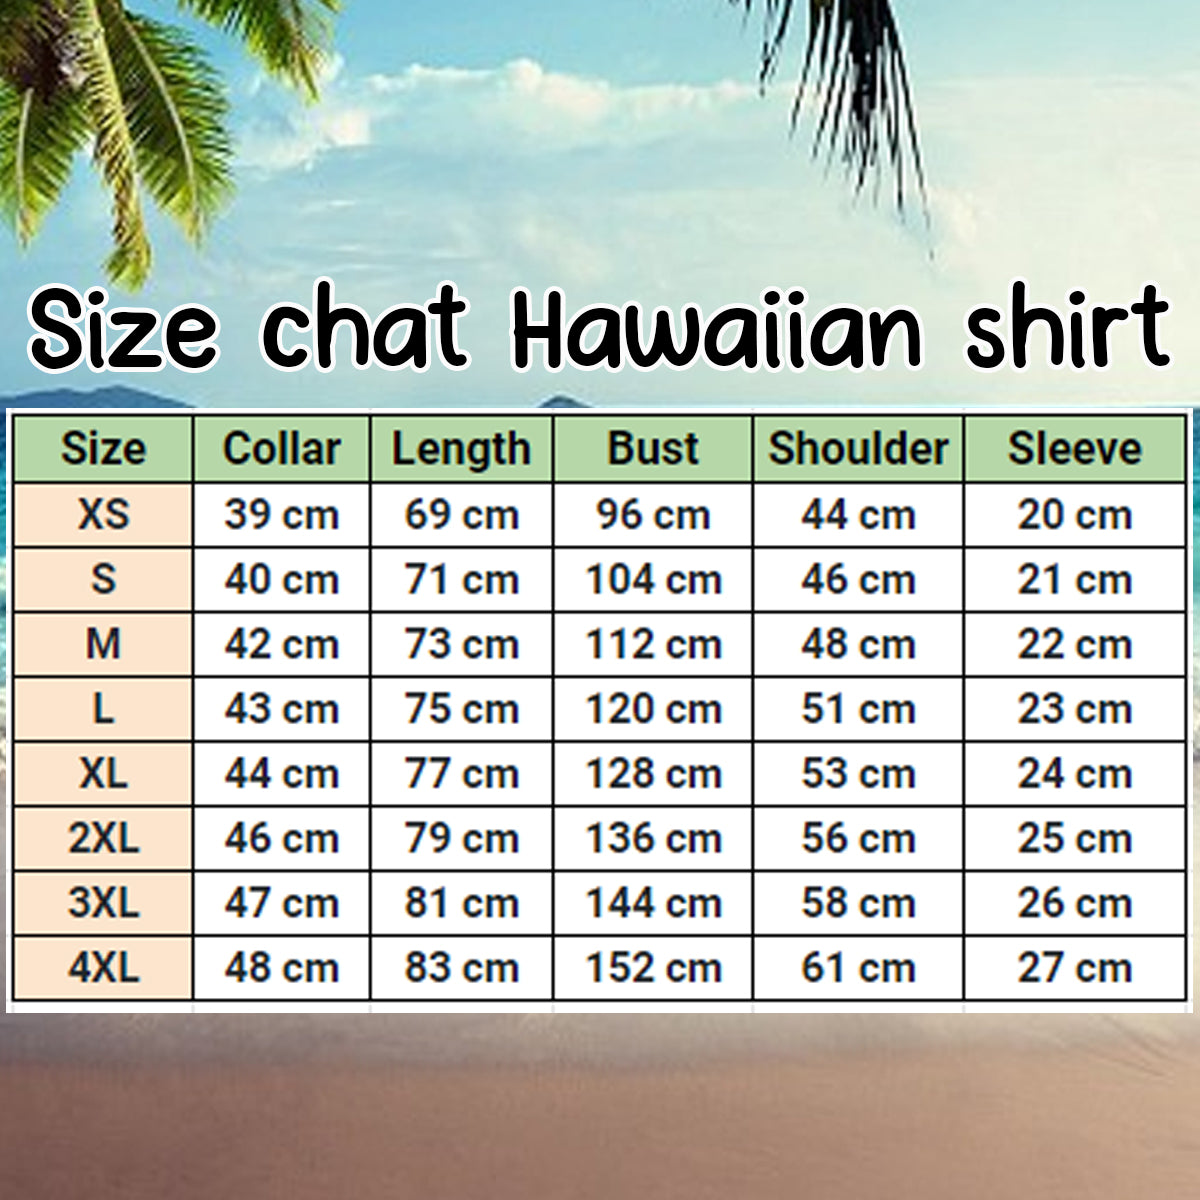 Summer Labradoodle Hawaiian Shirt/ Floral Dog Short Sleeve Hawaiian Aloha Shirt for Men/ Women/ Gift for summer